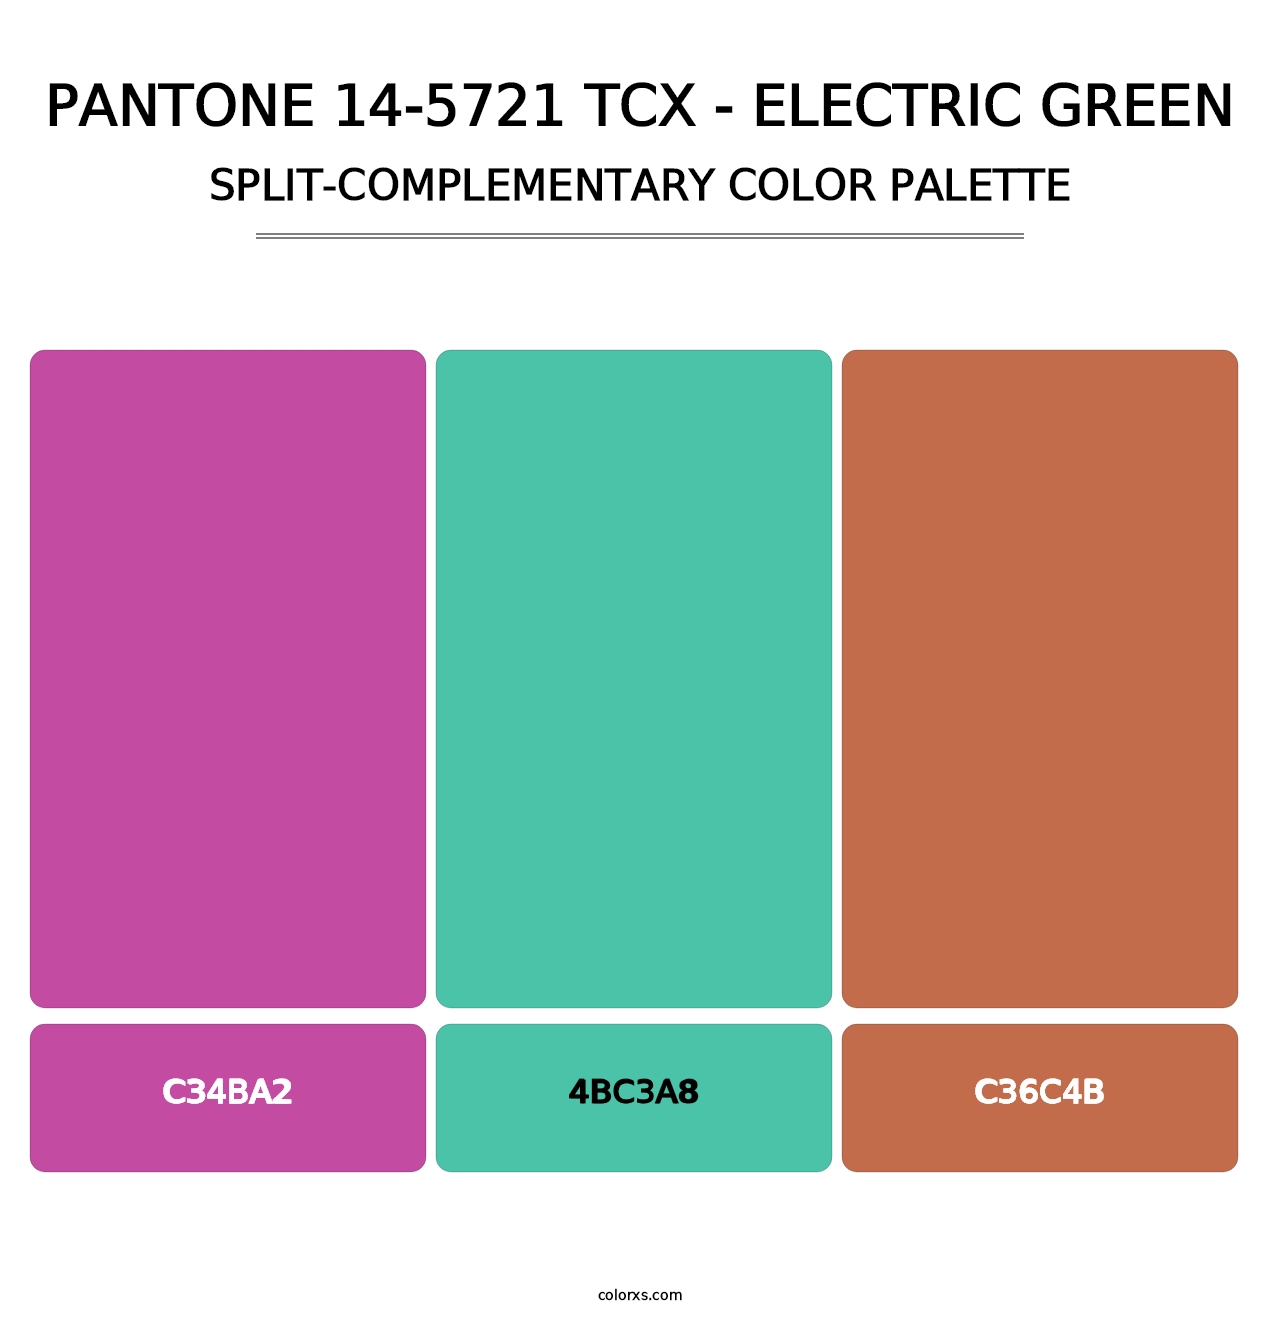 PANTONE 14-5721 TCX - Electric Green - Split-Complementary Color Palette